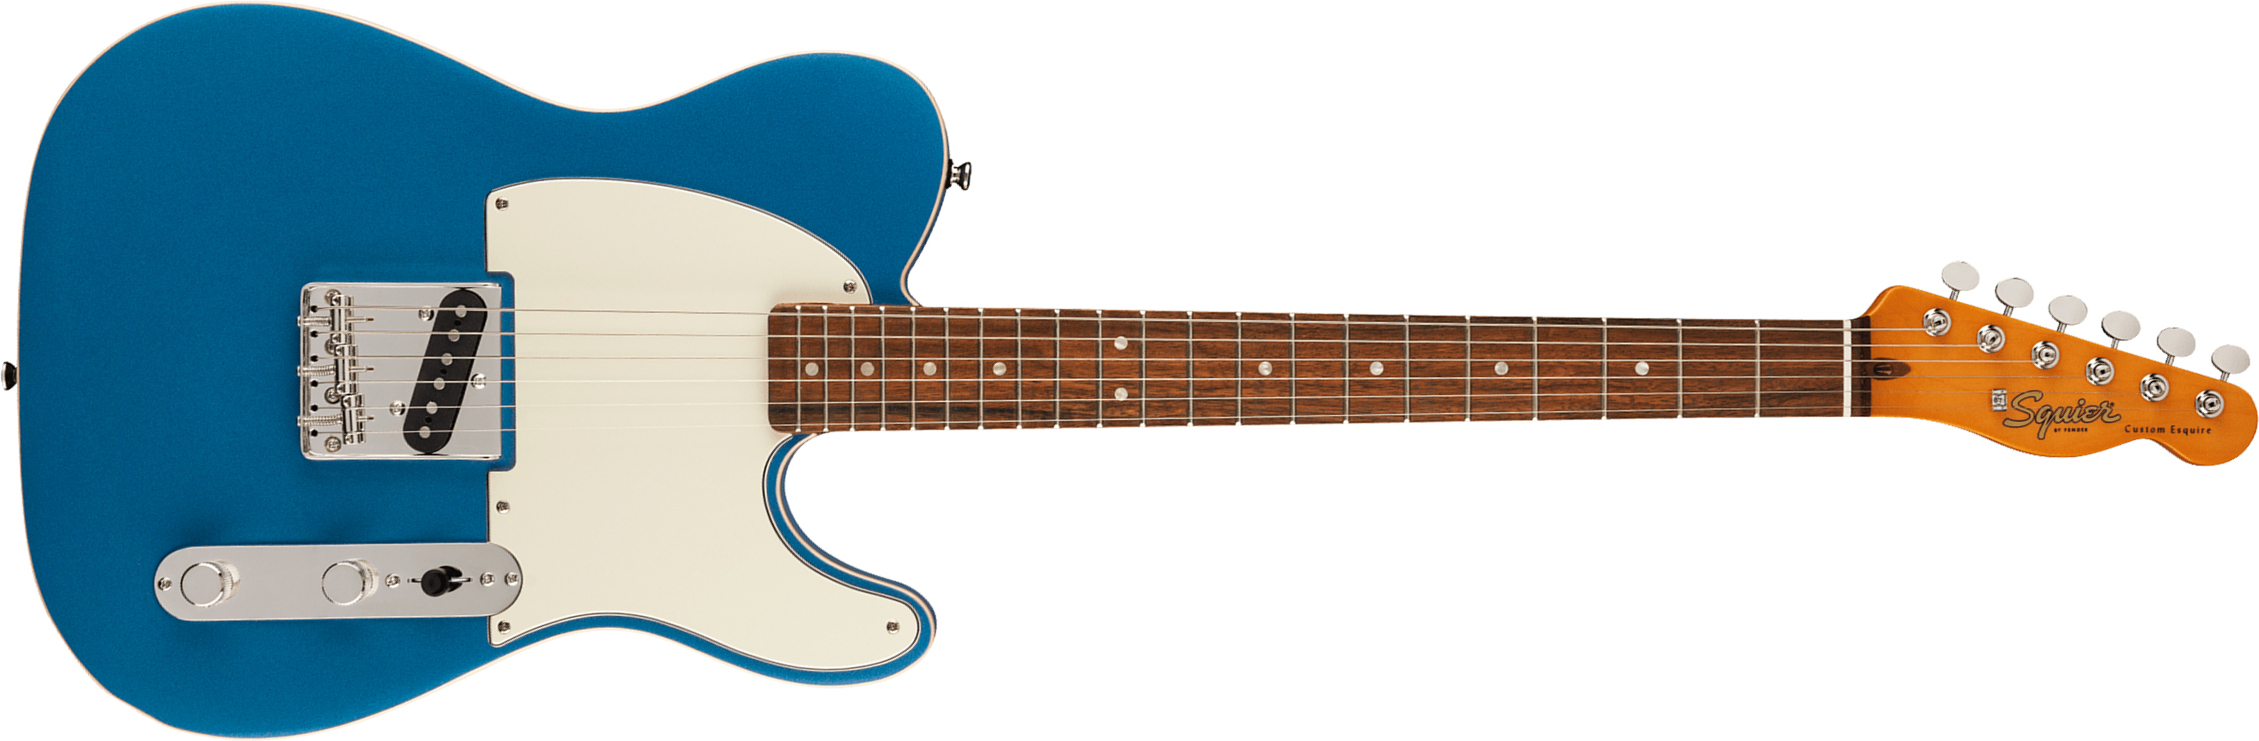 Squier Esquire Tele '60s Custom Classic Vibe Fsr Ltd Lau - Lake Placid Blue - Televorm elektrische gitaar - Main picture